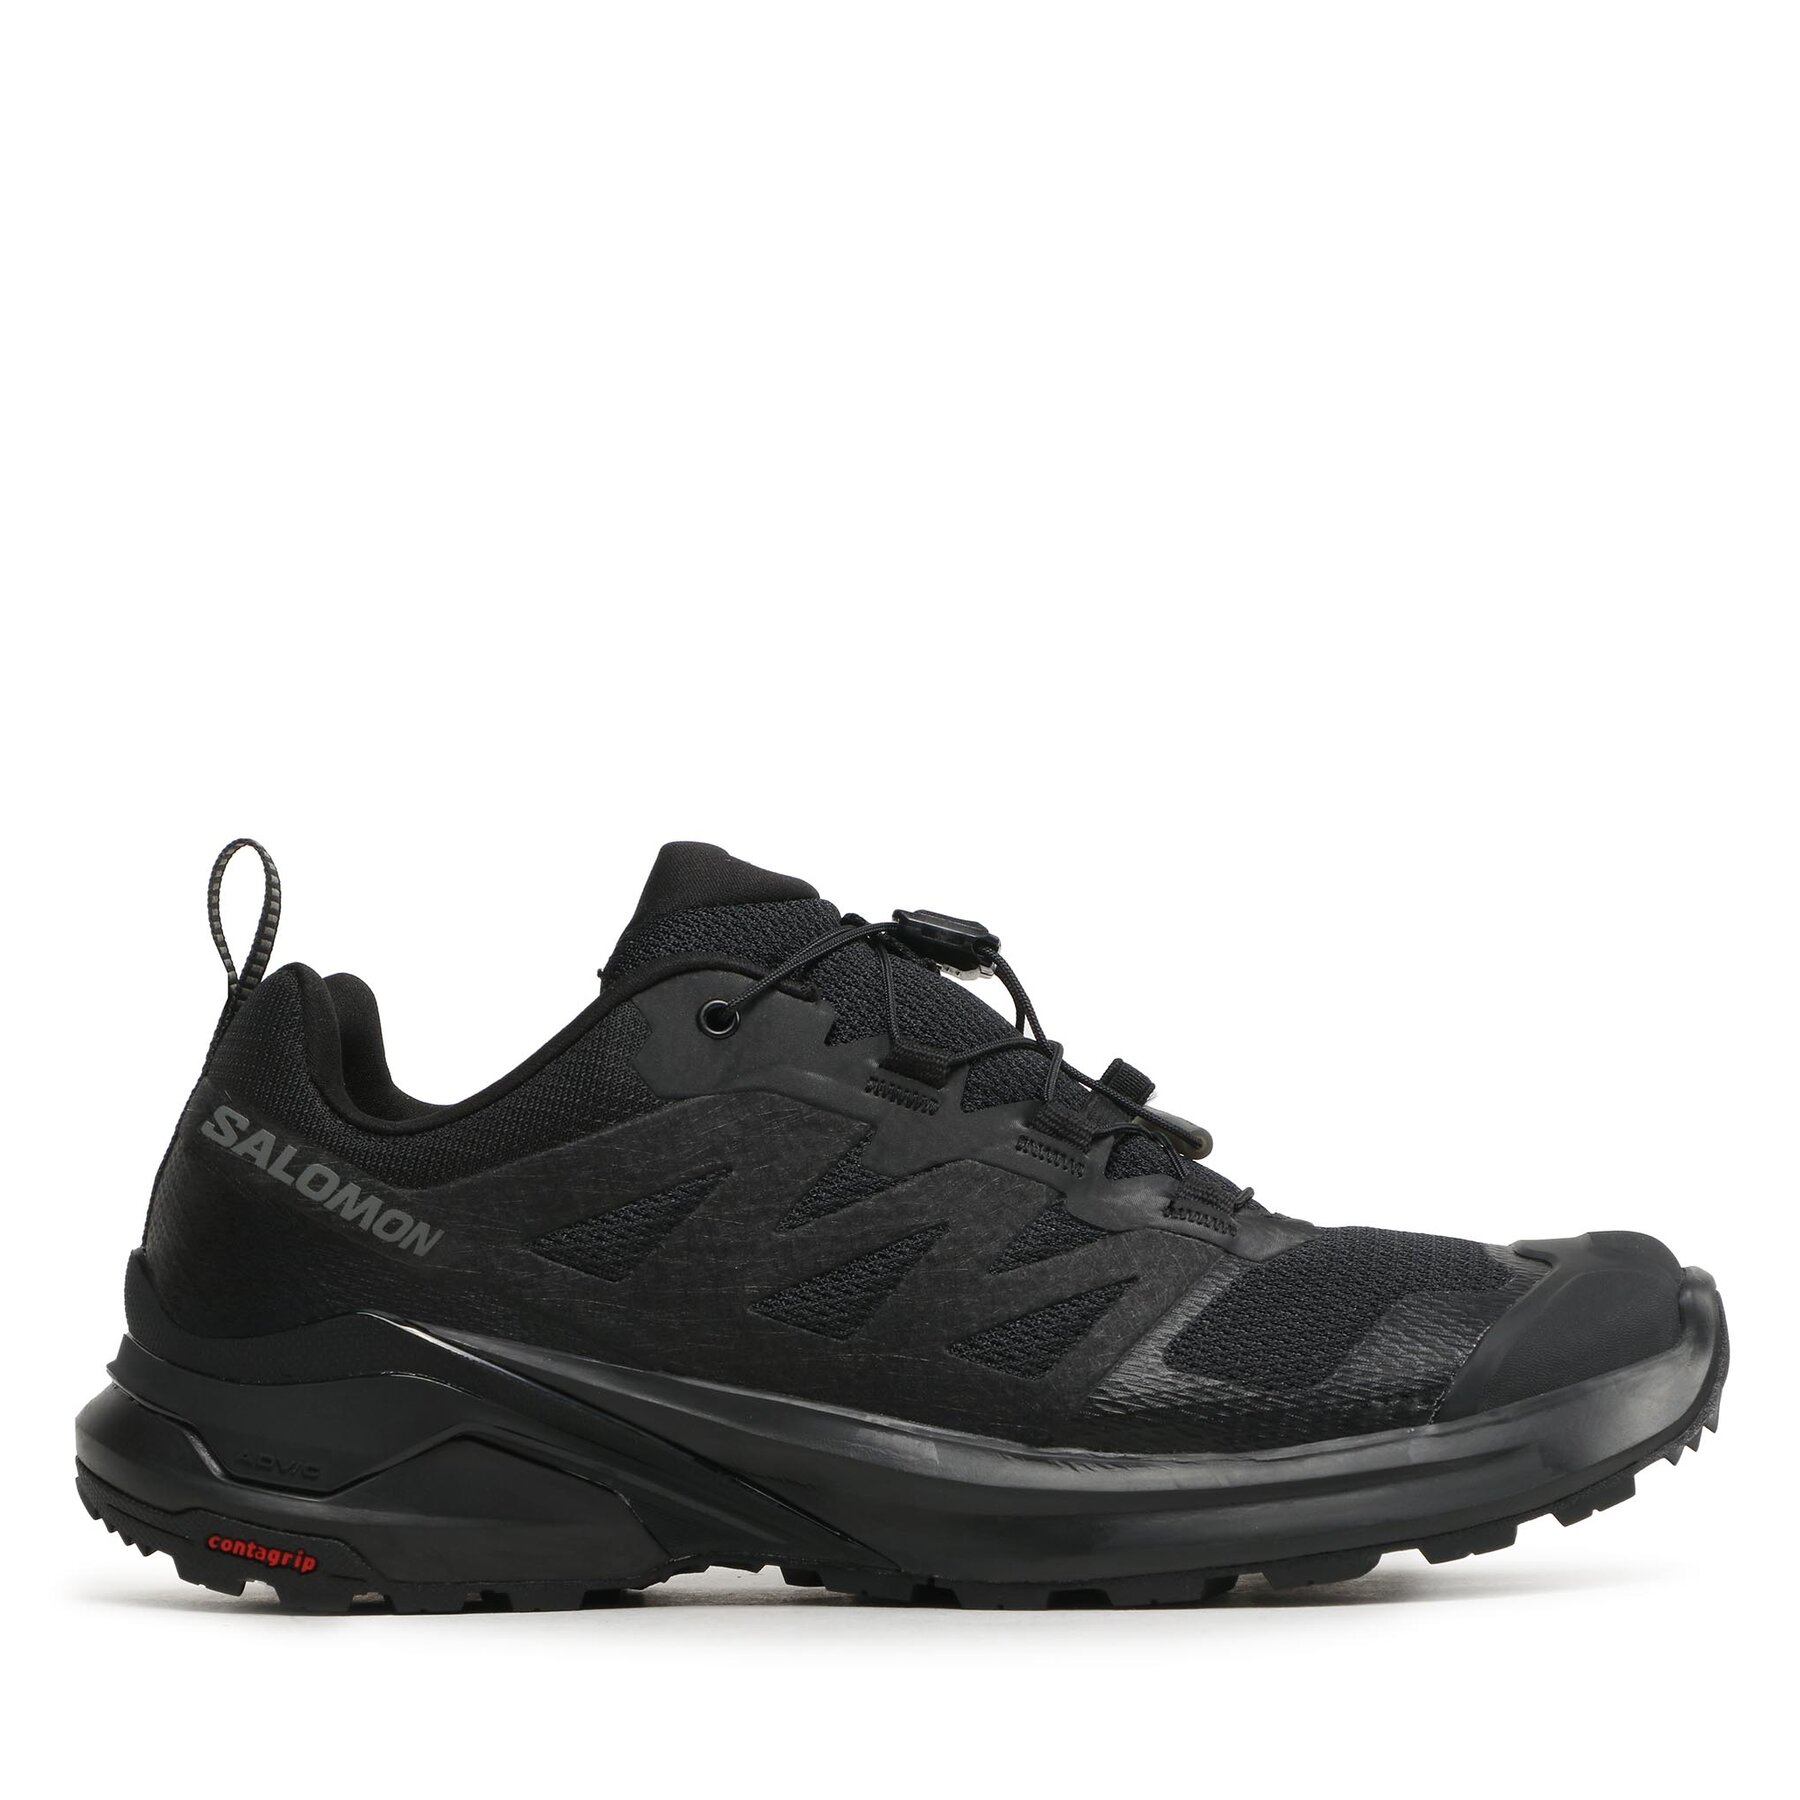 Schuhe Salomon X-Adventure L47321000 Black/Black/Black von Salomon